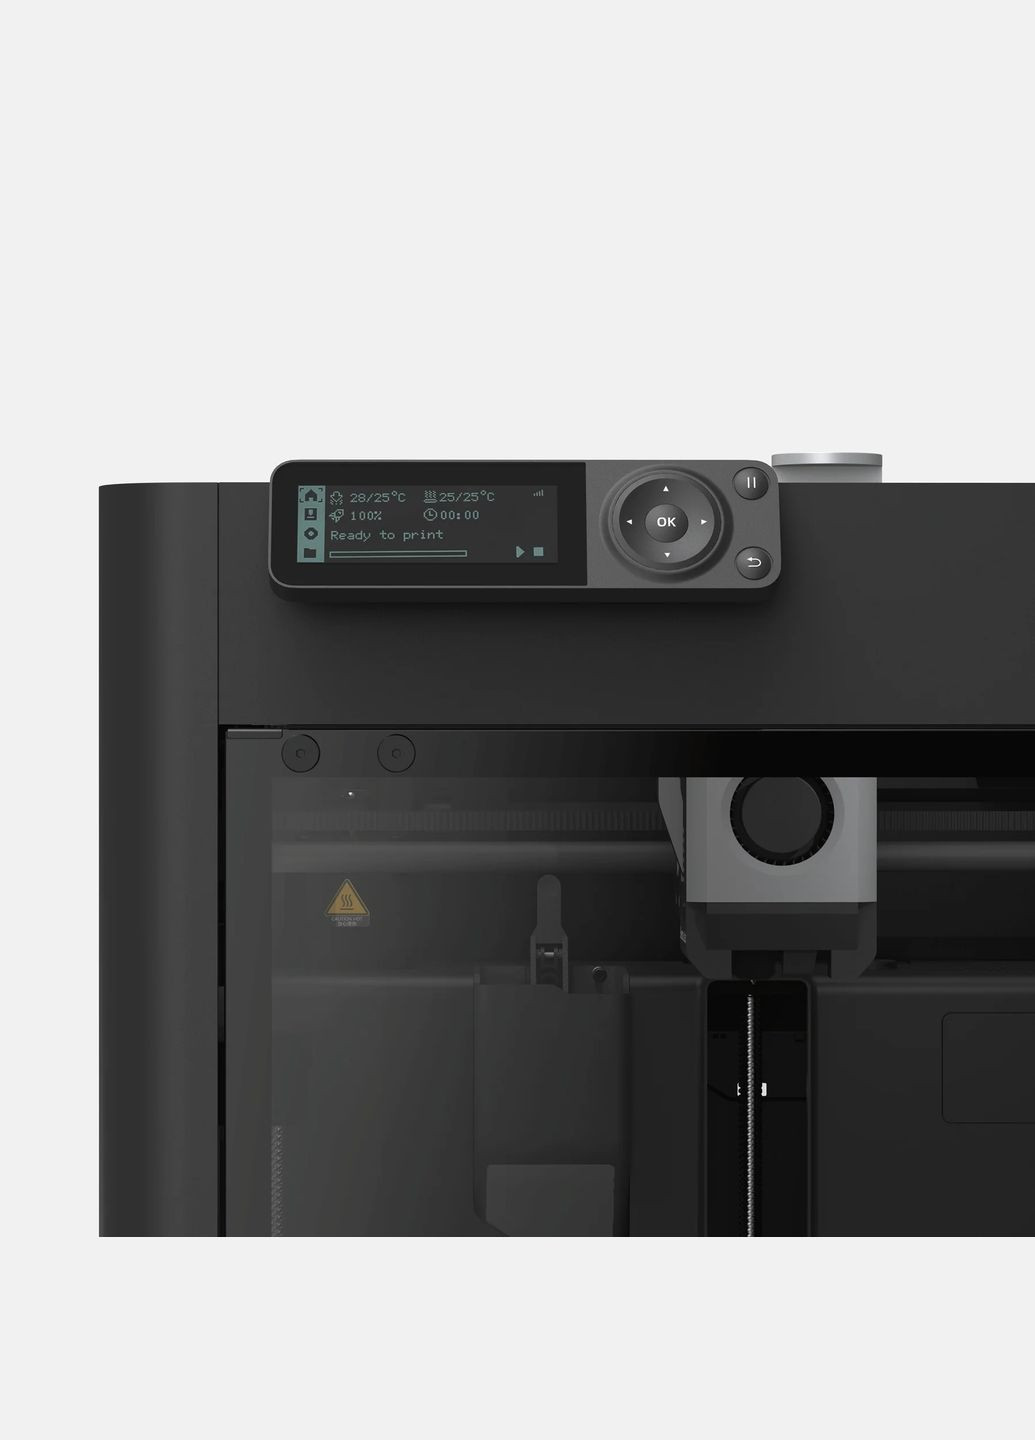 3D принтер P1S BL0003U Bambu Lab (275462259)